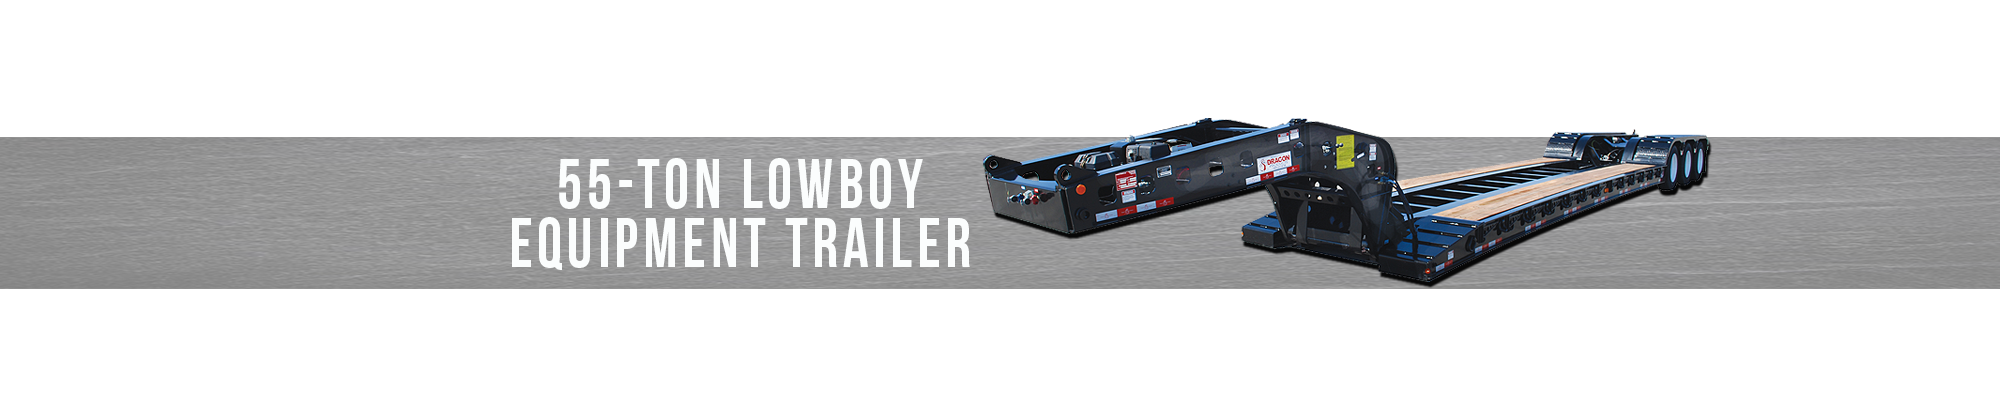 55-Ton Lowboy Equipment Trailer